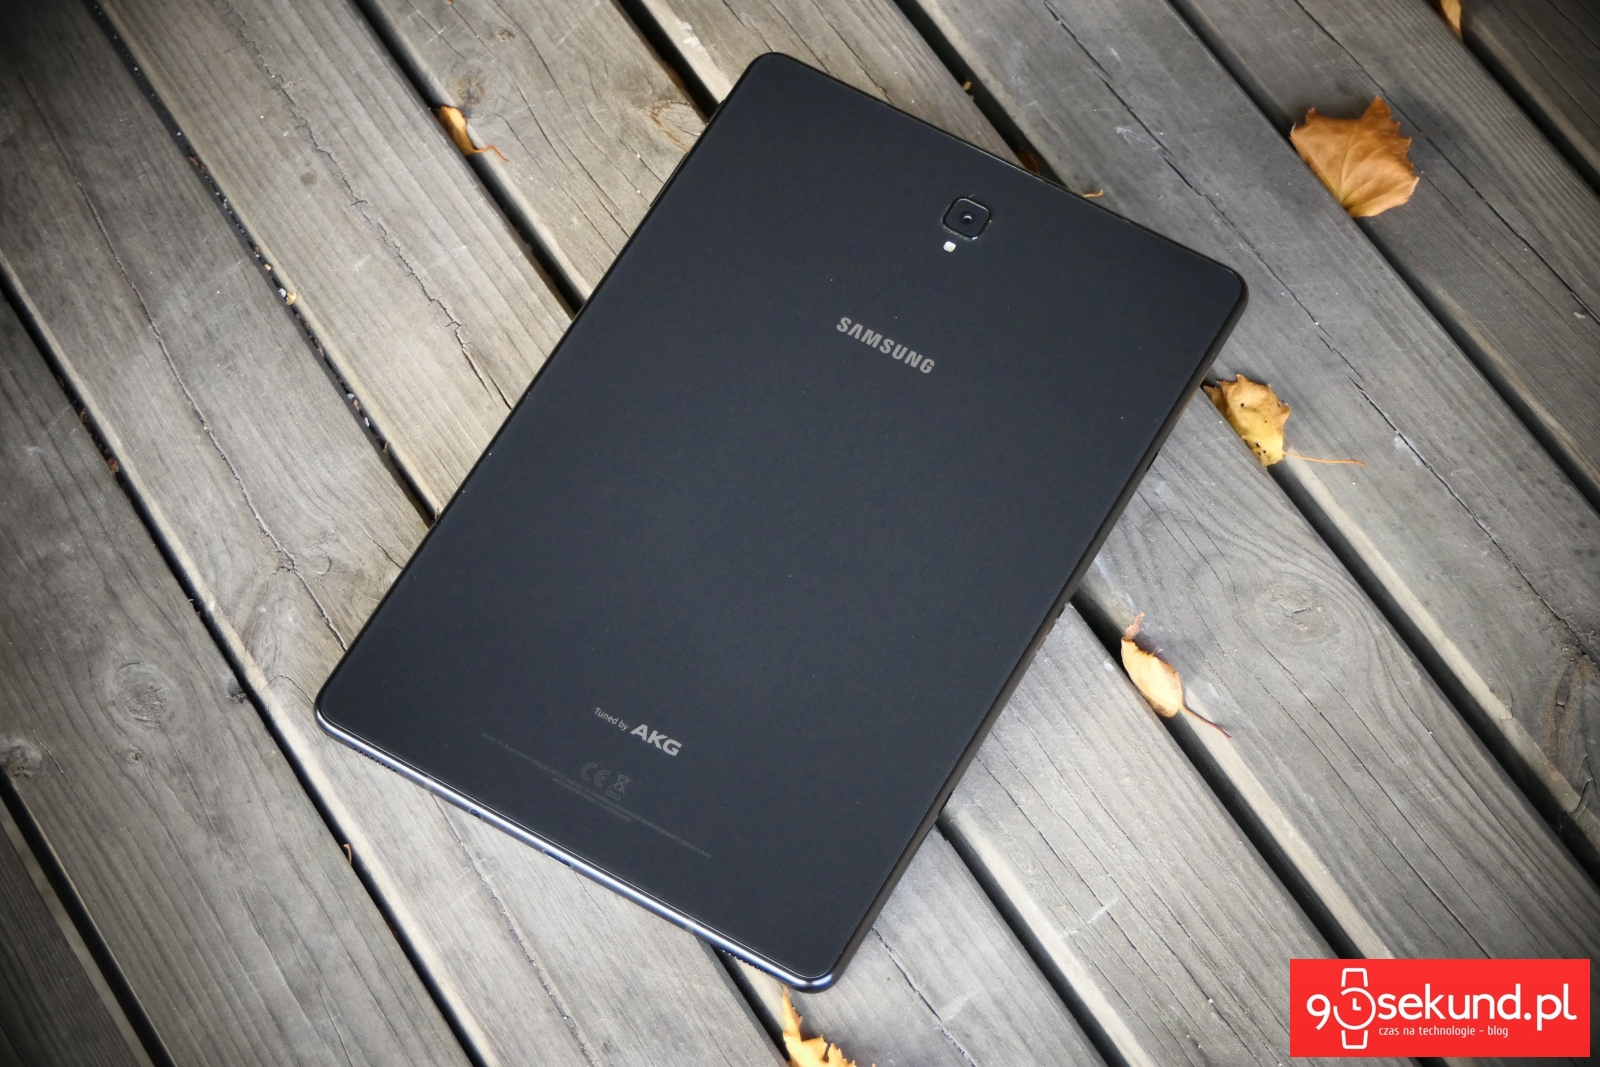 Recenzja tabletu Samsung Galaxy Tab S4 - Michał Brożyński - 90sekund.pl